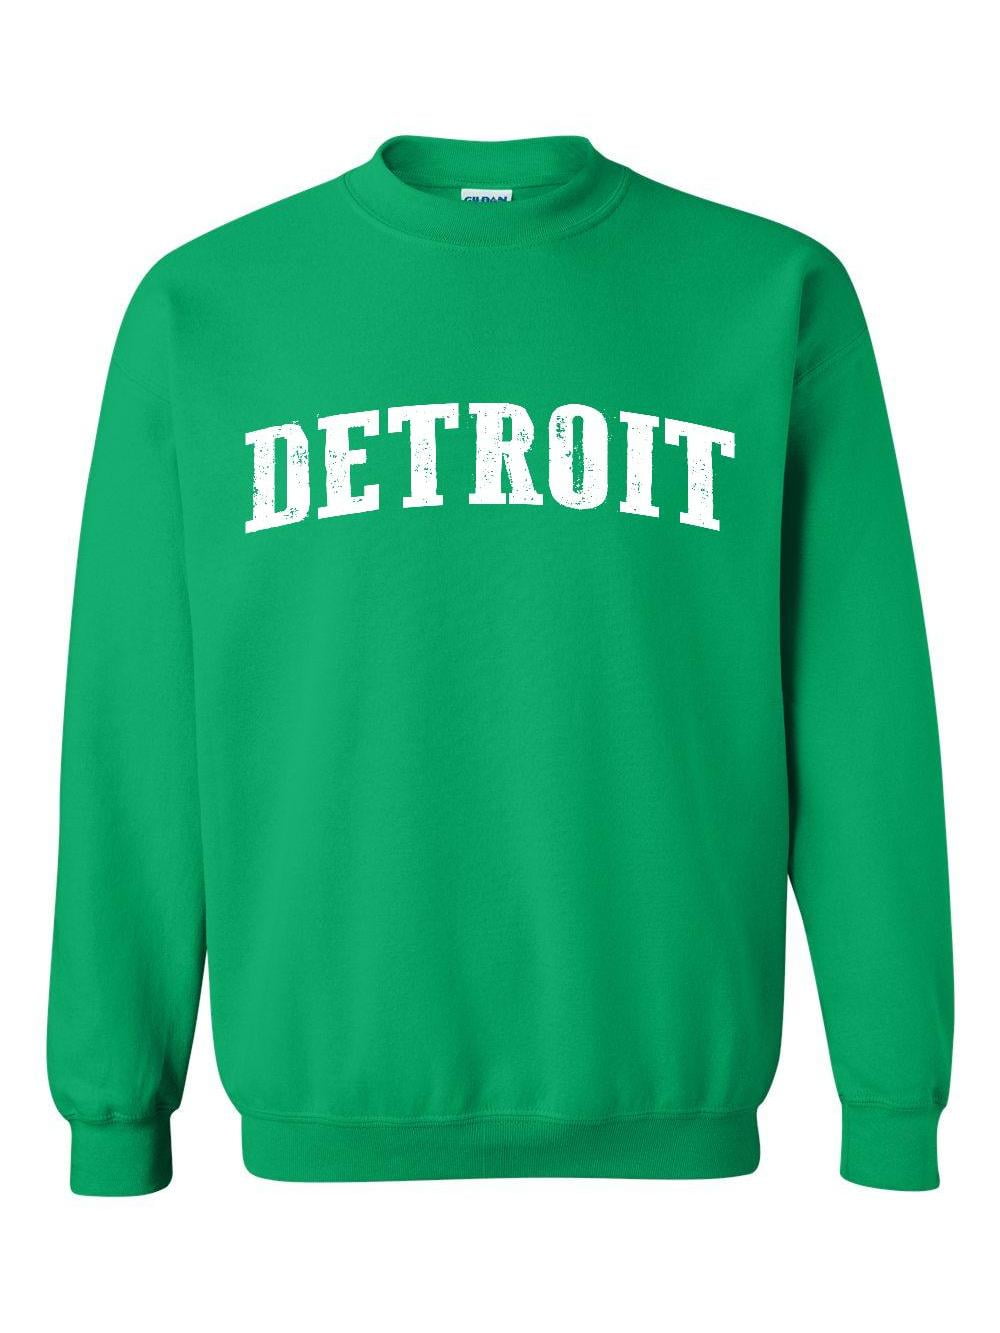 Mens Sweatshirts and Hoodies - Detroit - Walmart.com